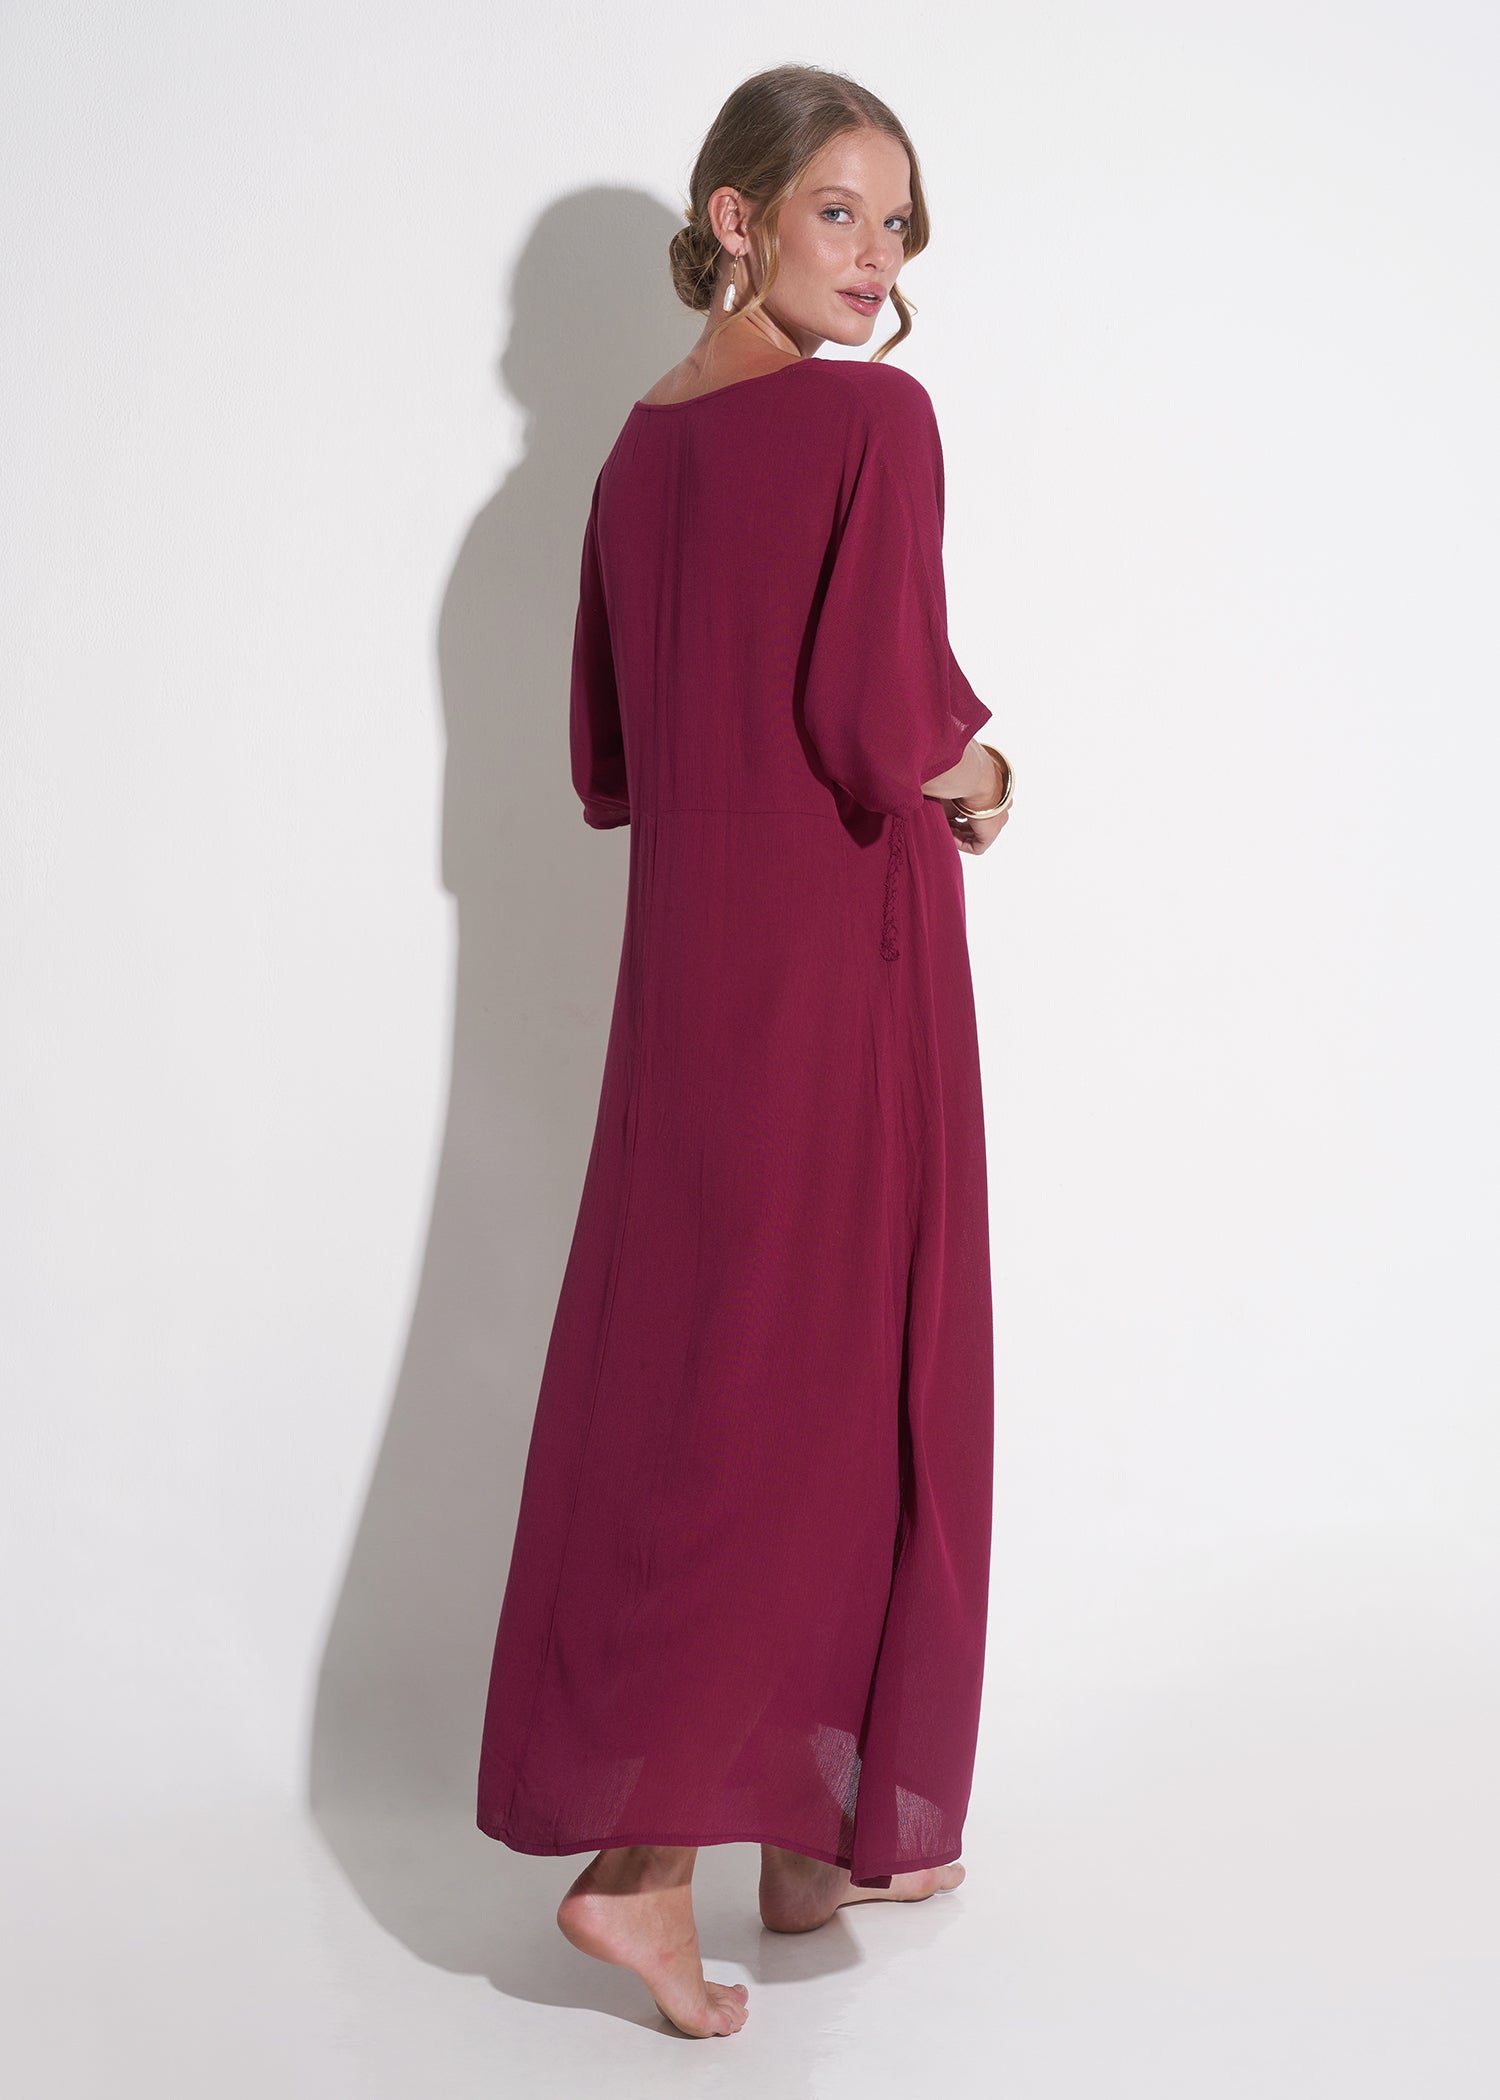 Grecian Maxi Dress in burgundy